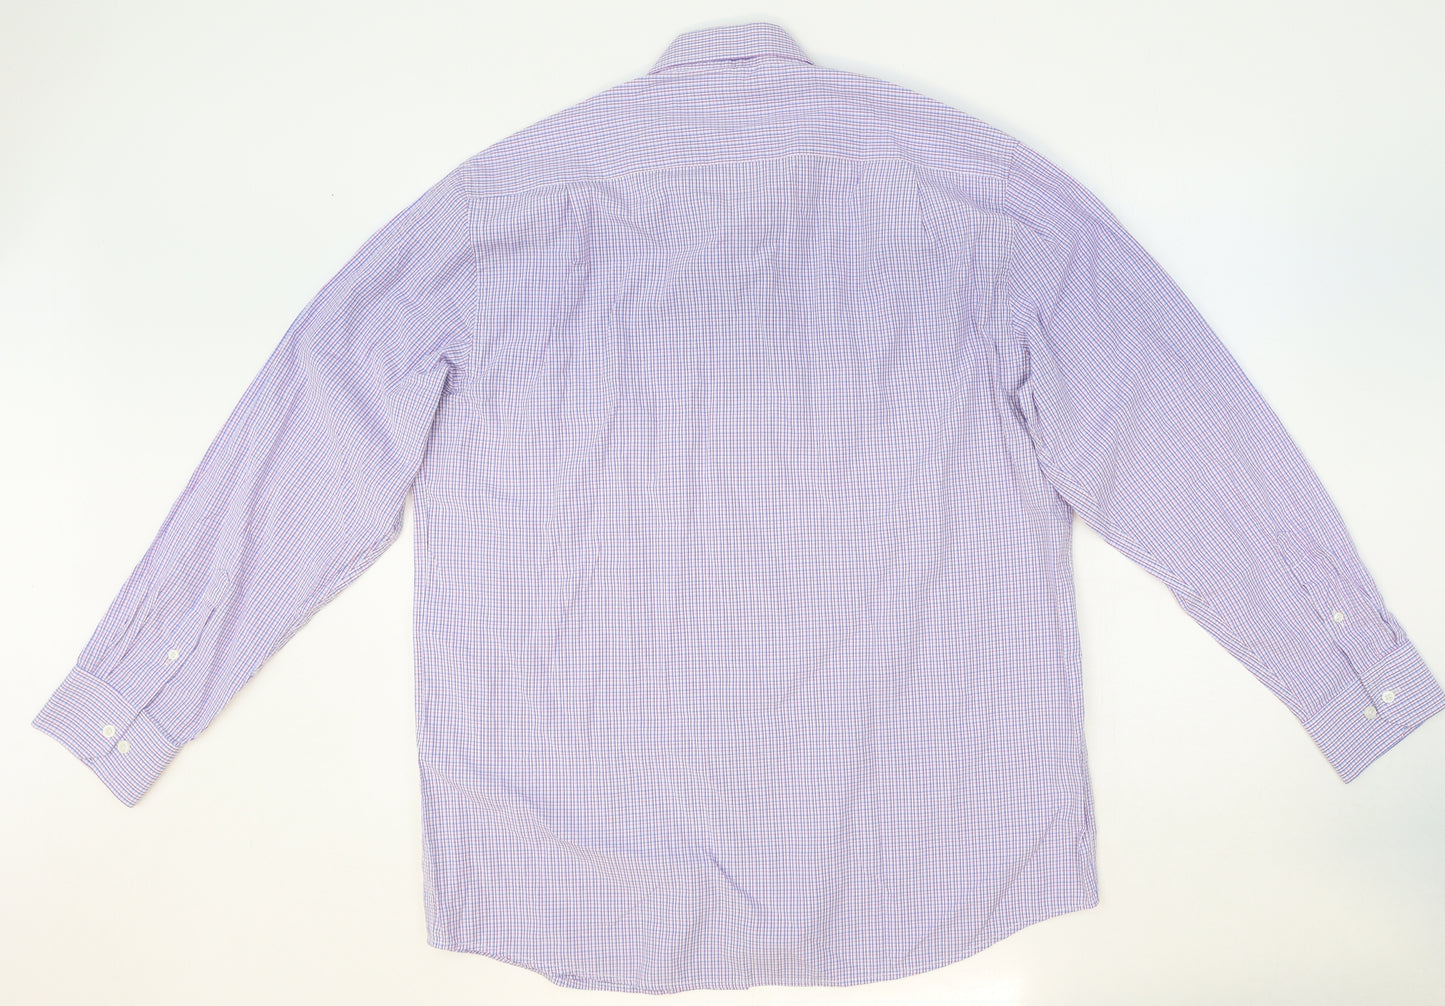 Greenwoods Mens Purple Check Polyester Dress Shirt Size 17 Round Neck Button